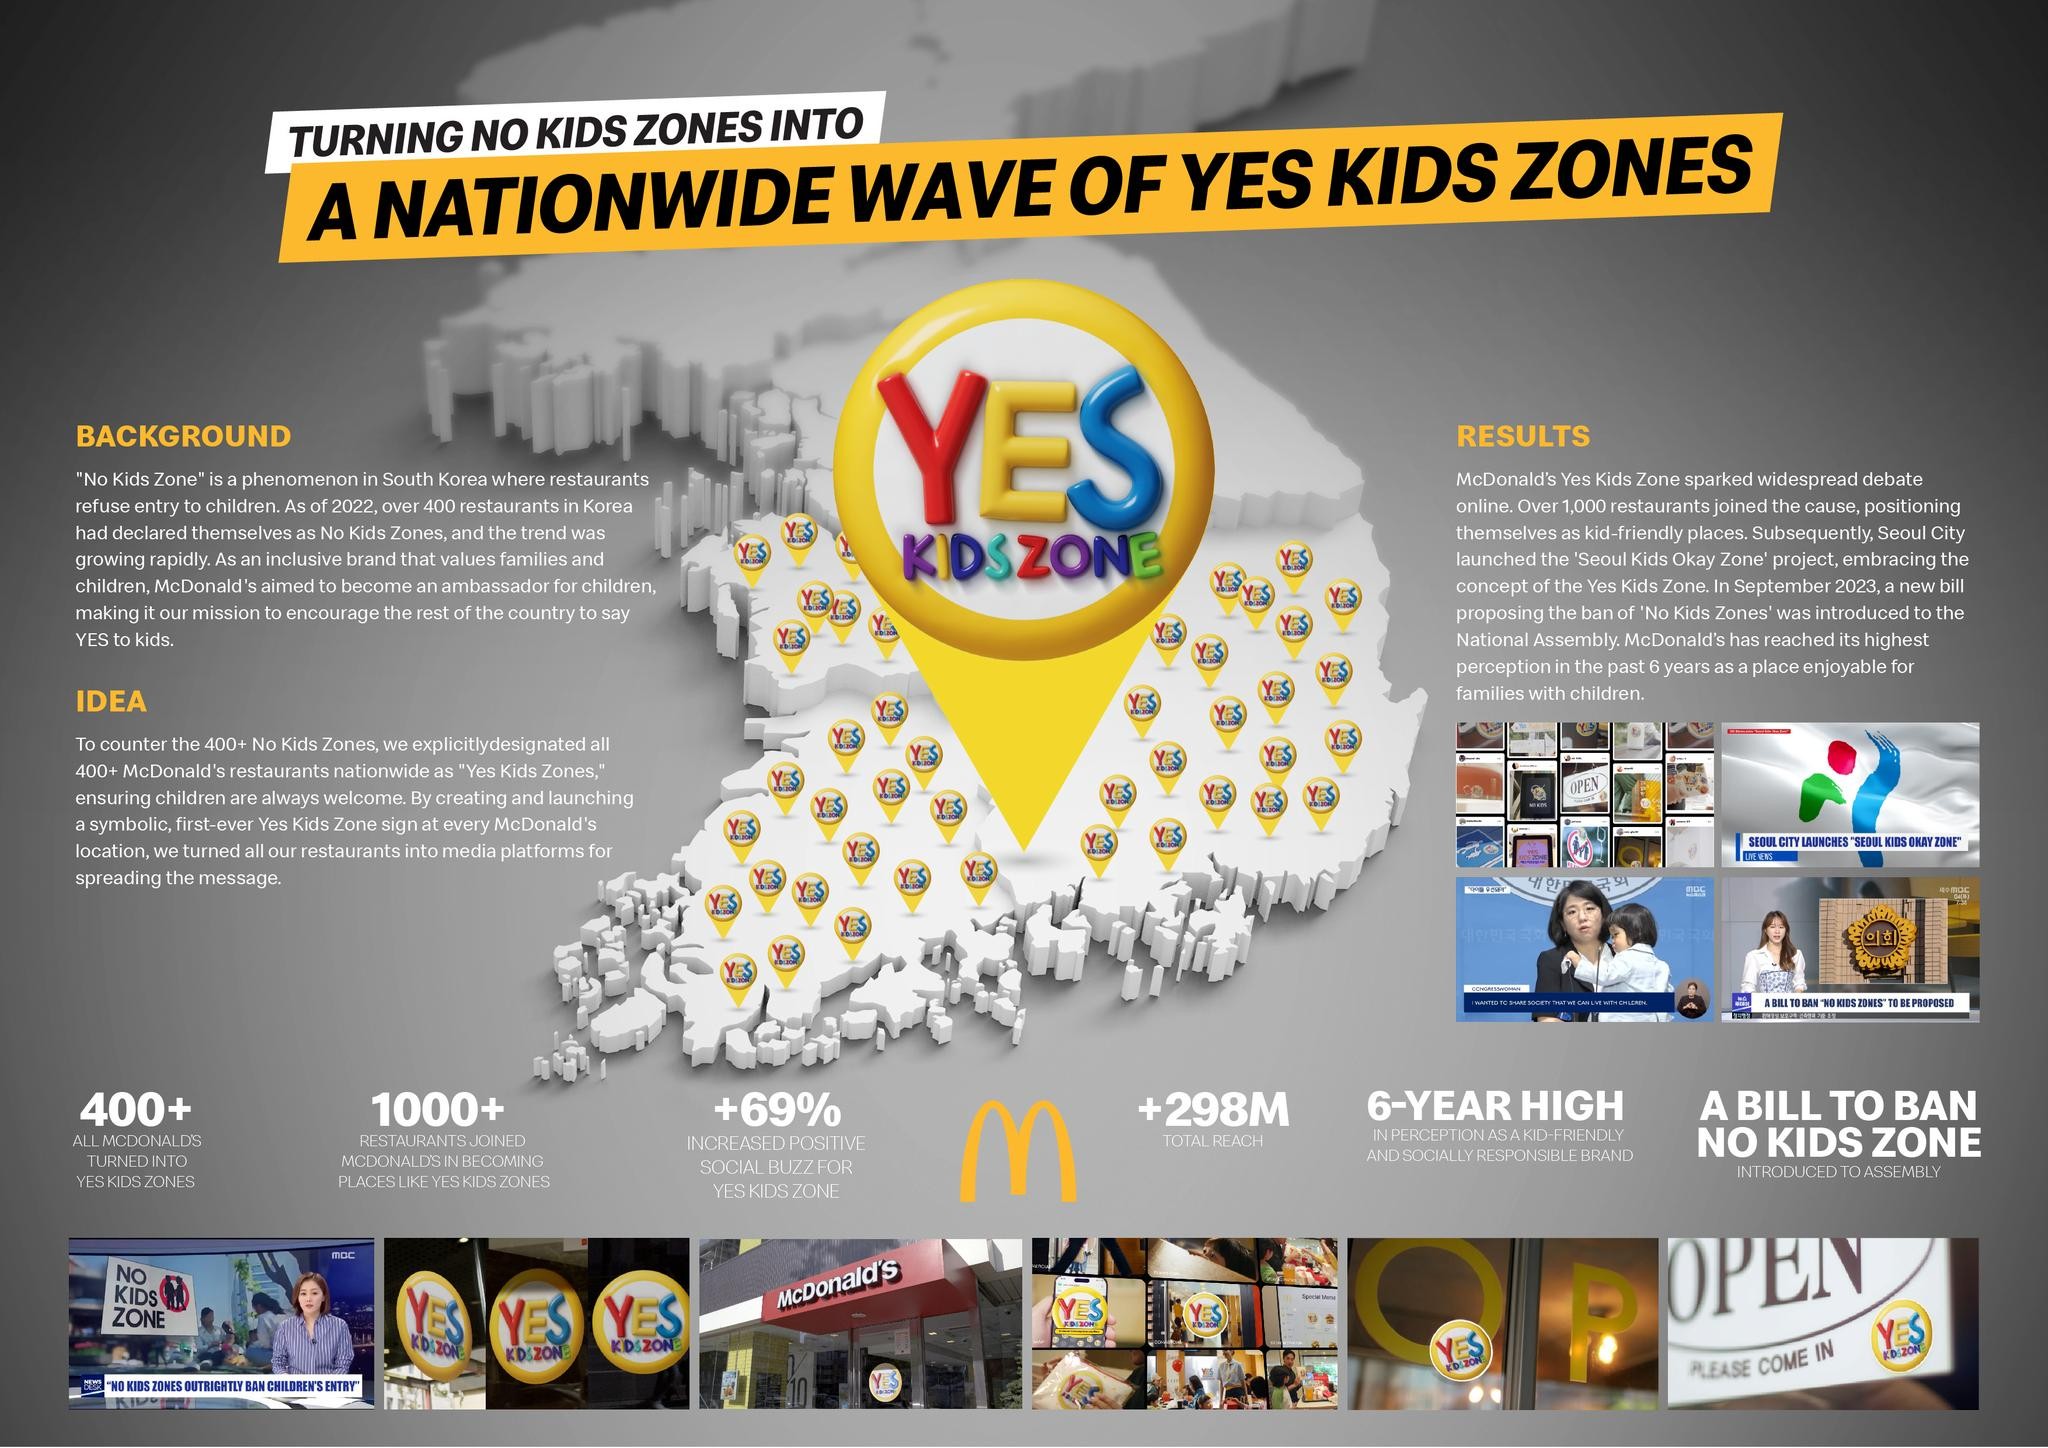 McDonald's Yes Kids Zone